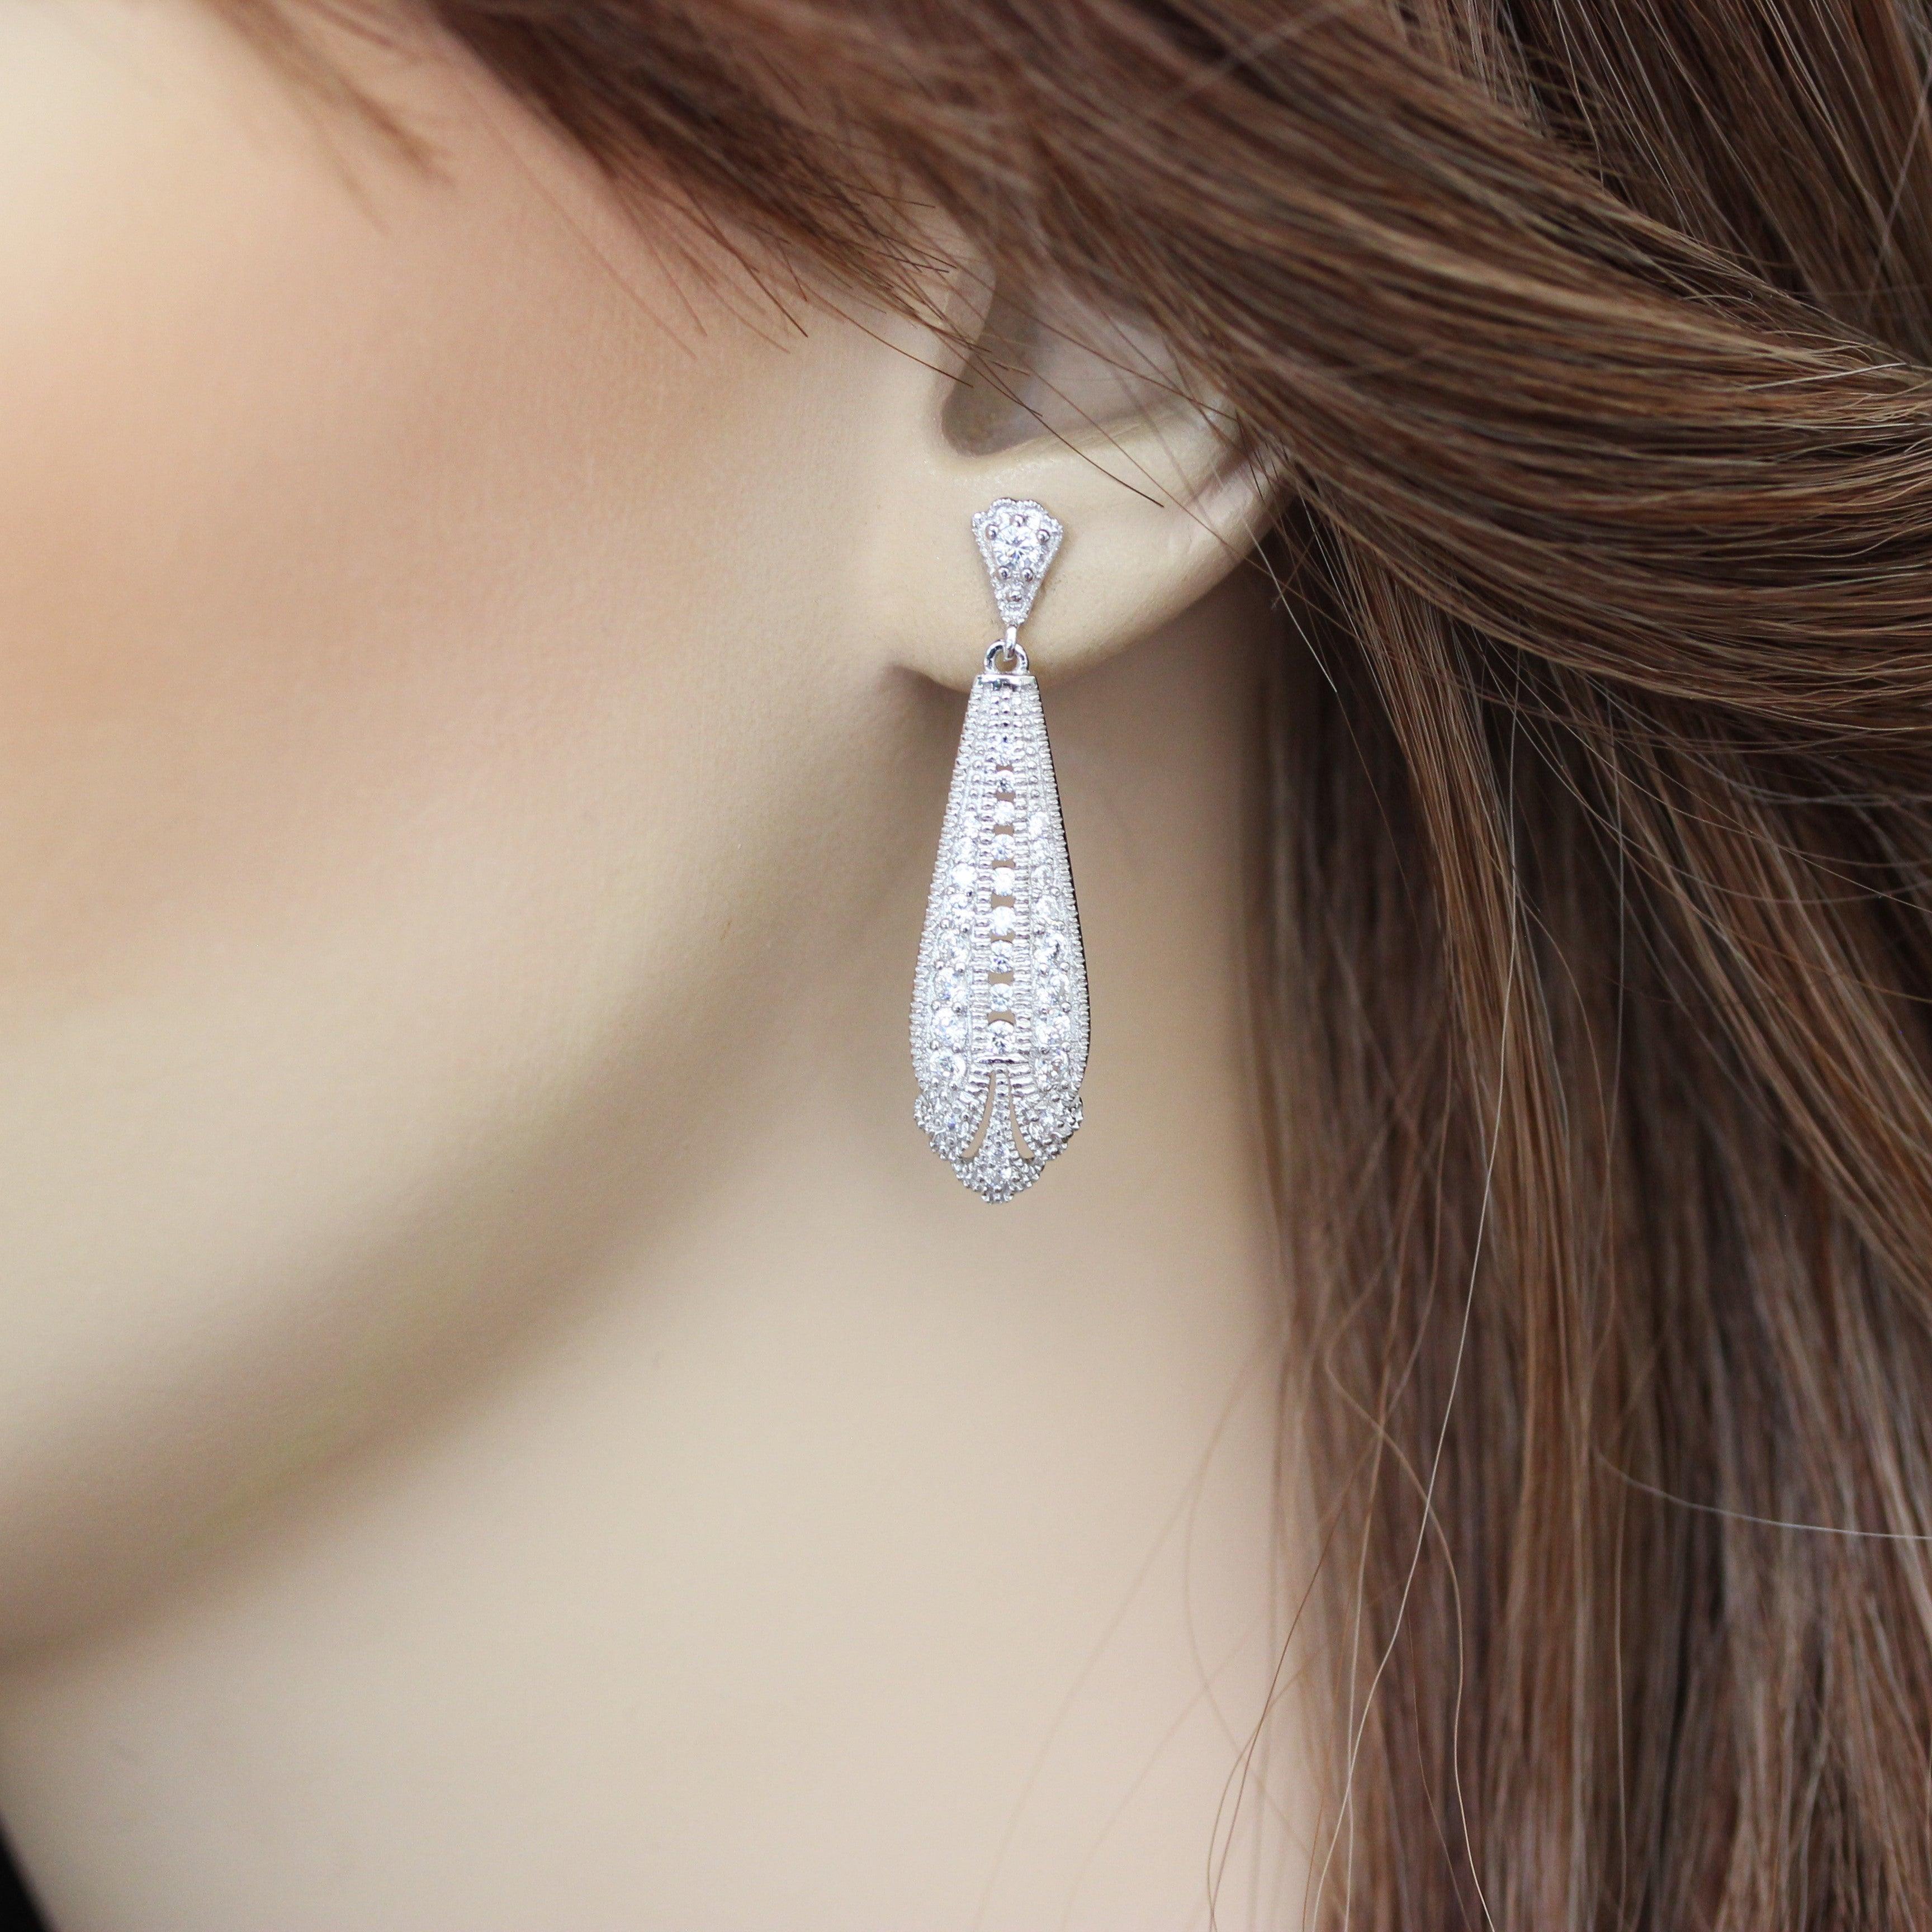 Sterling Silver Art Deco Inspired CZ Bridal Wedding Drop Earrings - STERLING SILVER DESIGNS